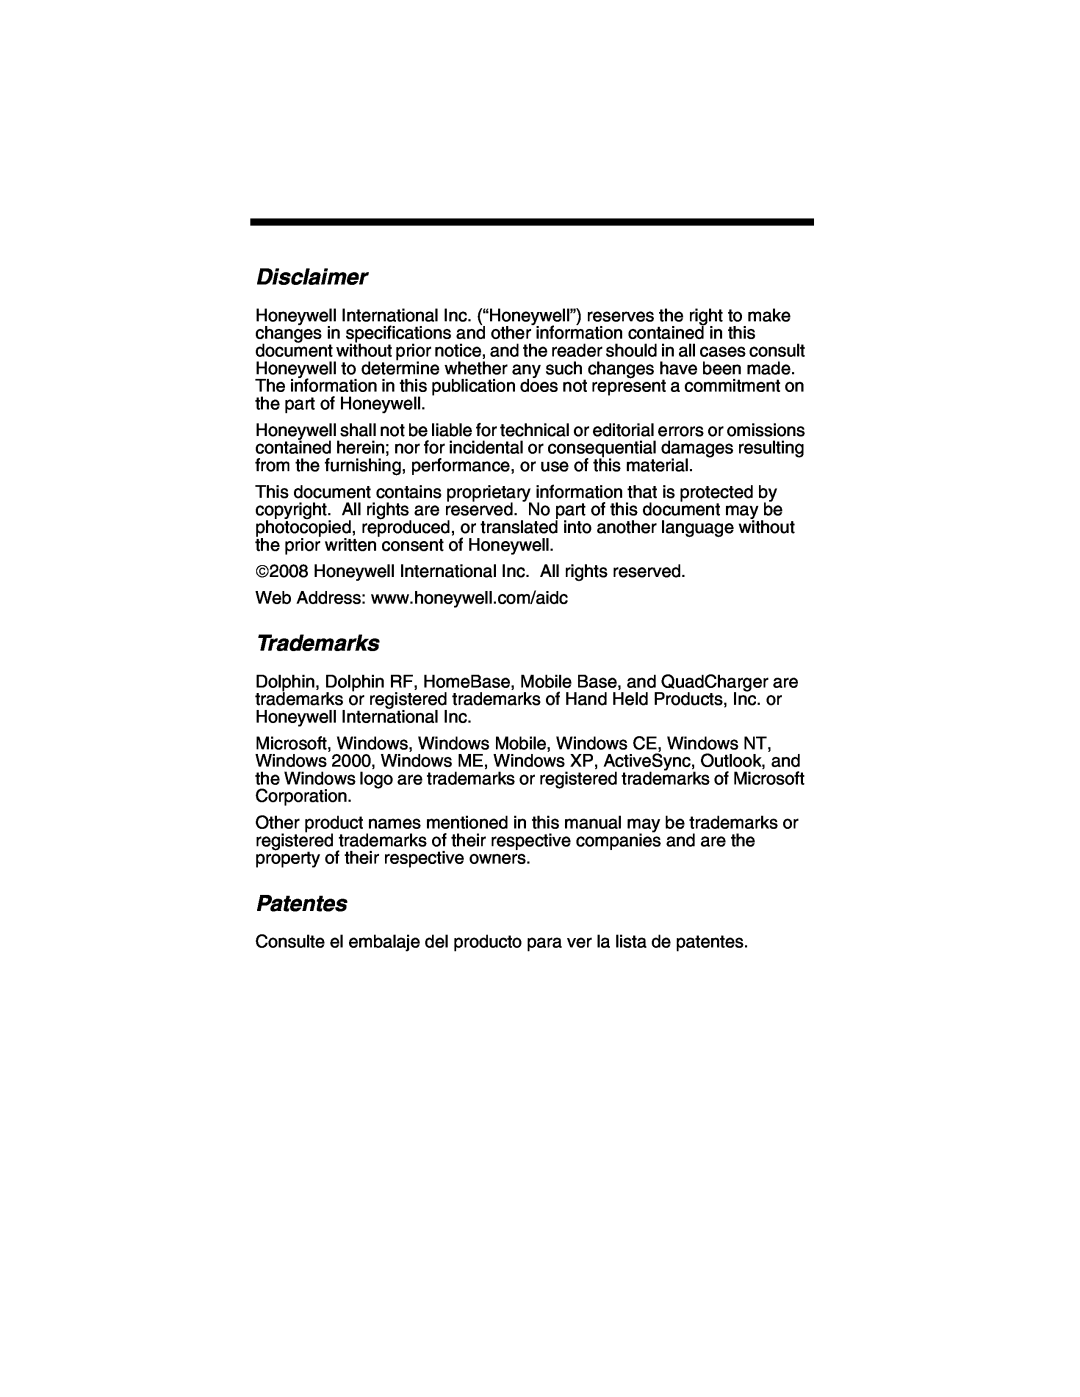 Honeywell 9900 manual Disclaimer, Trademarks, Patentes 